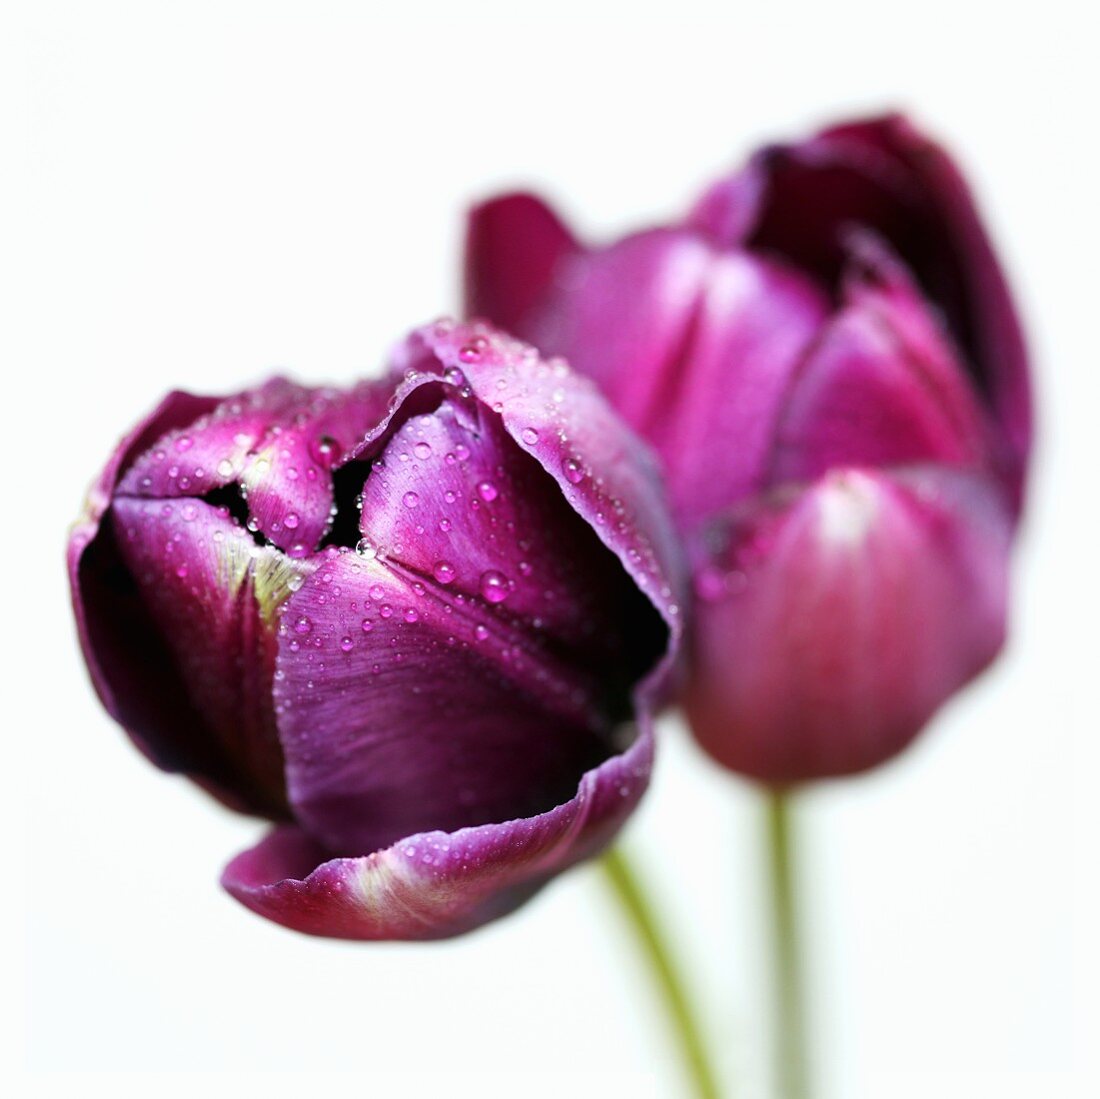 Queen of Night tulips with dew drops